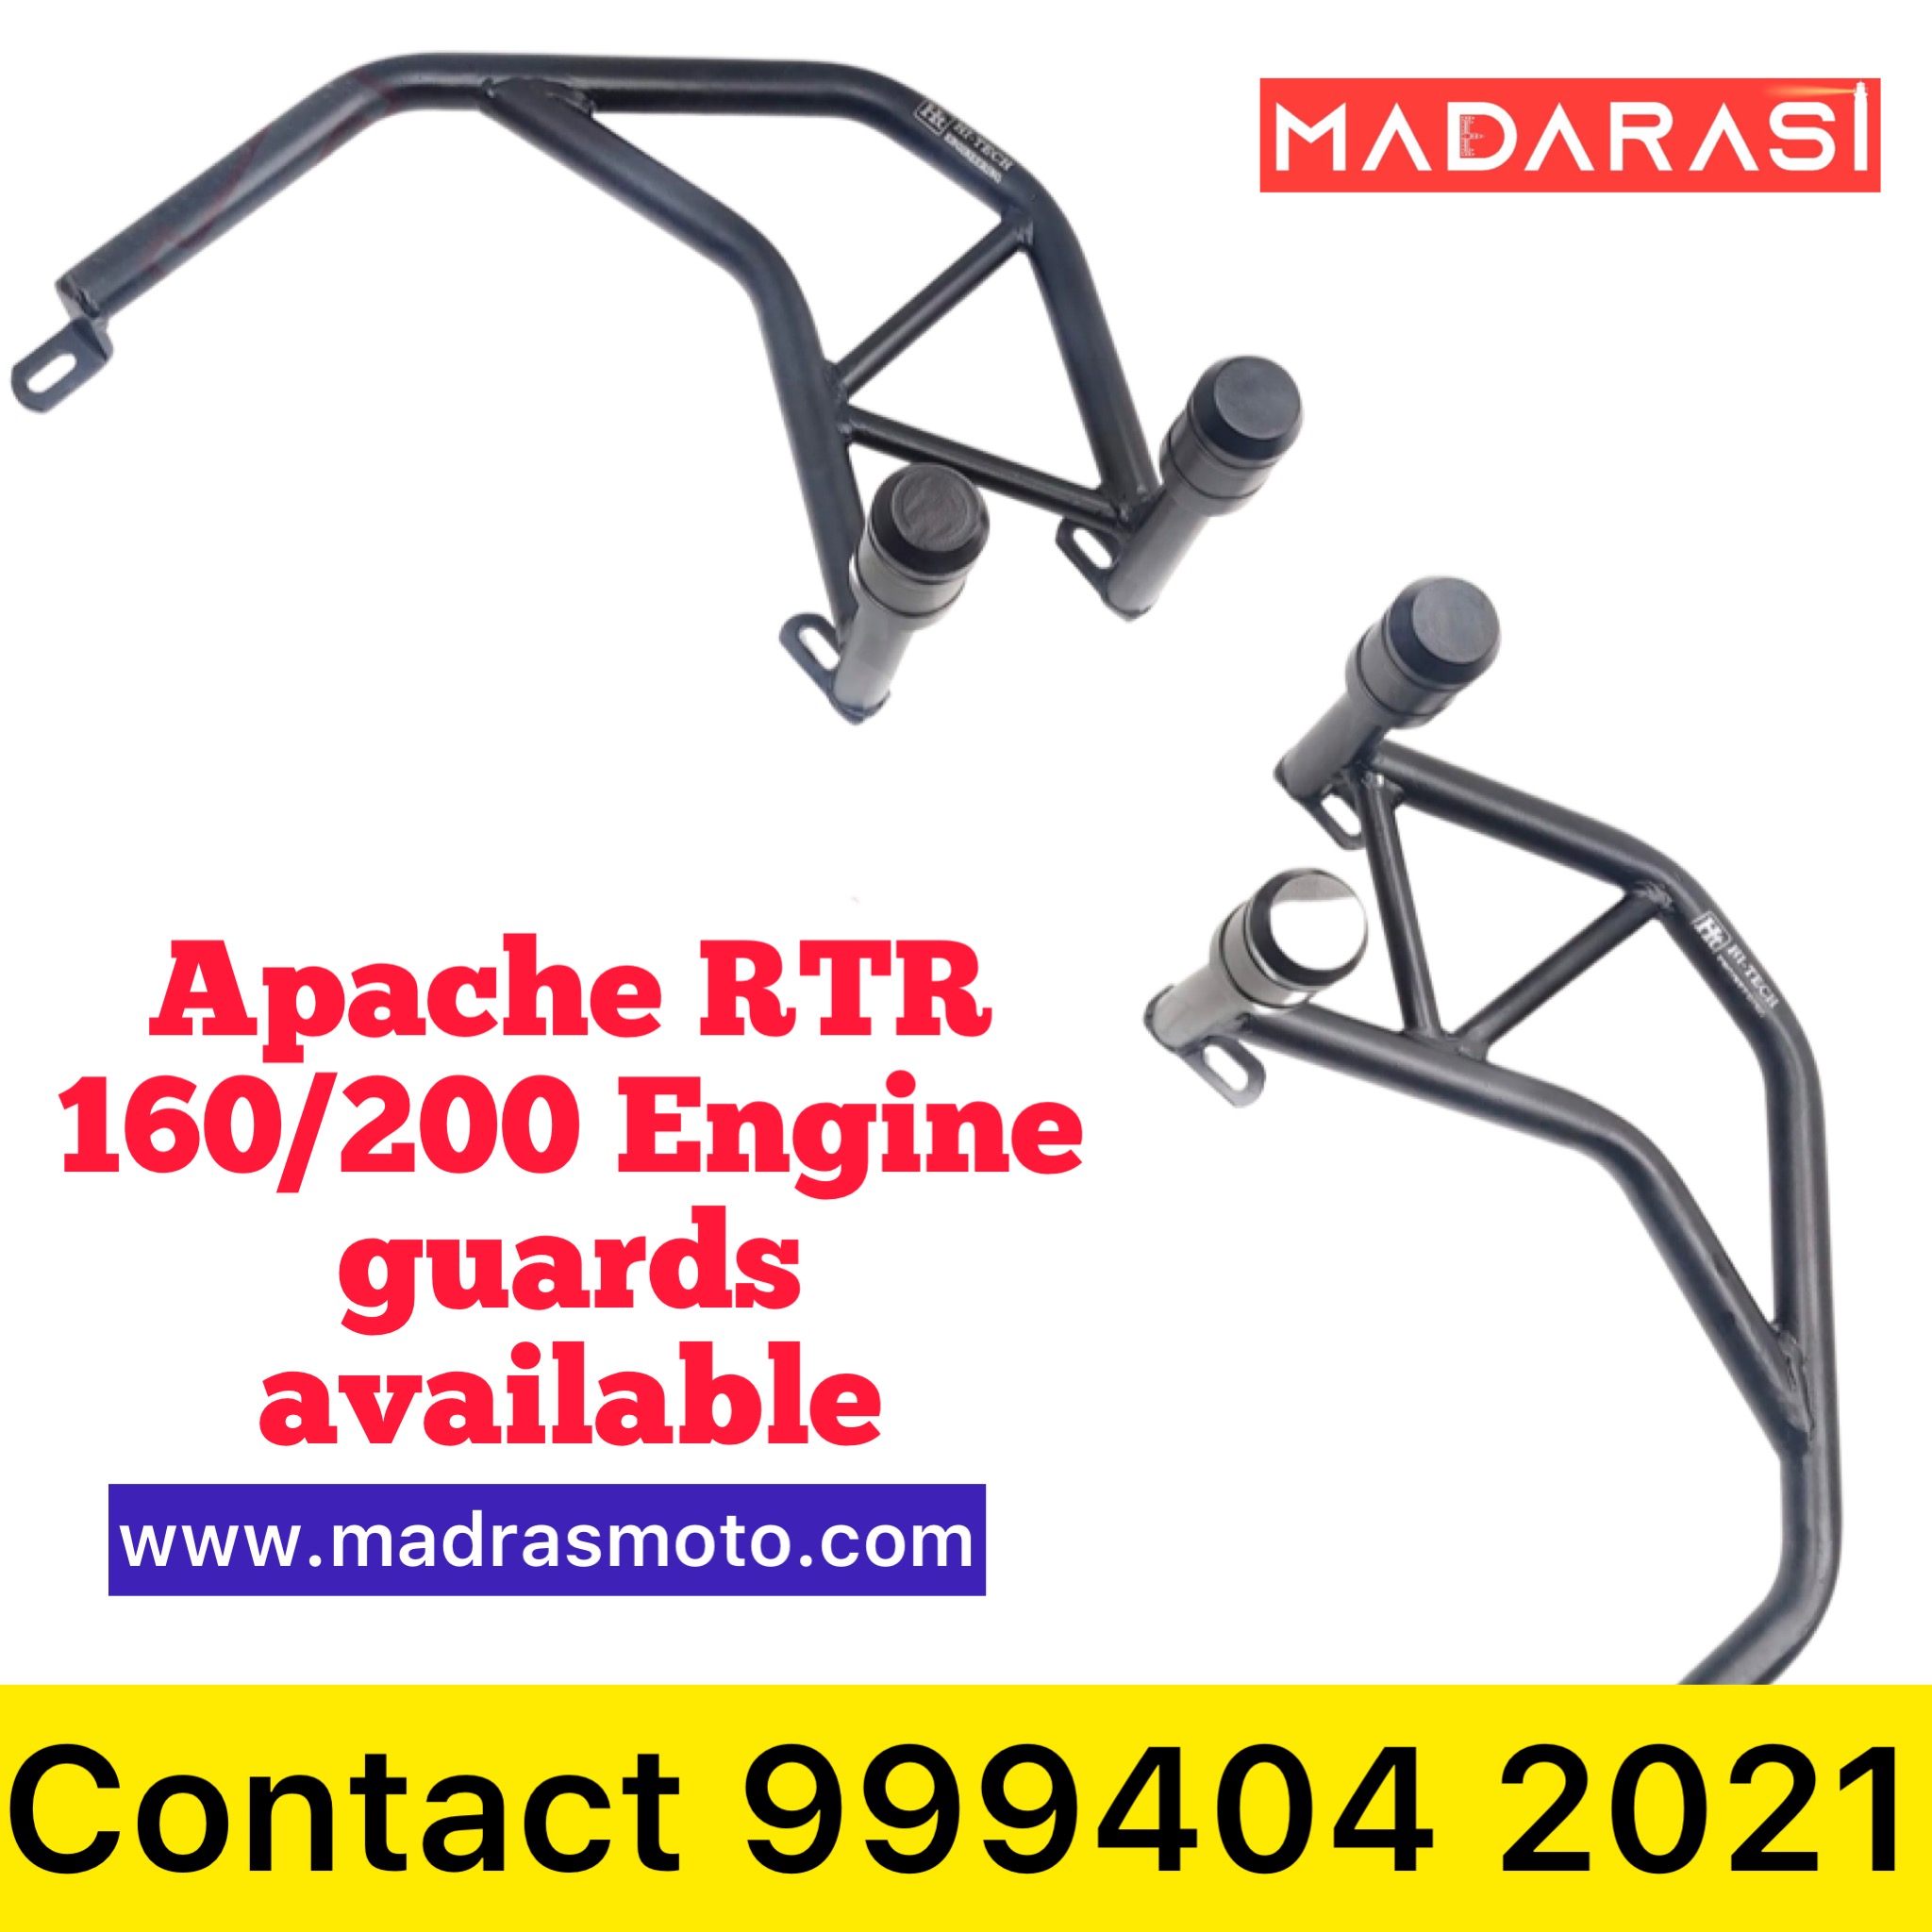 TVS Apache RTR 160/200 Engine guards